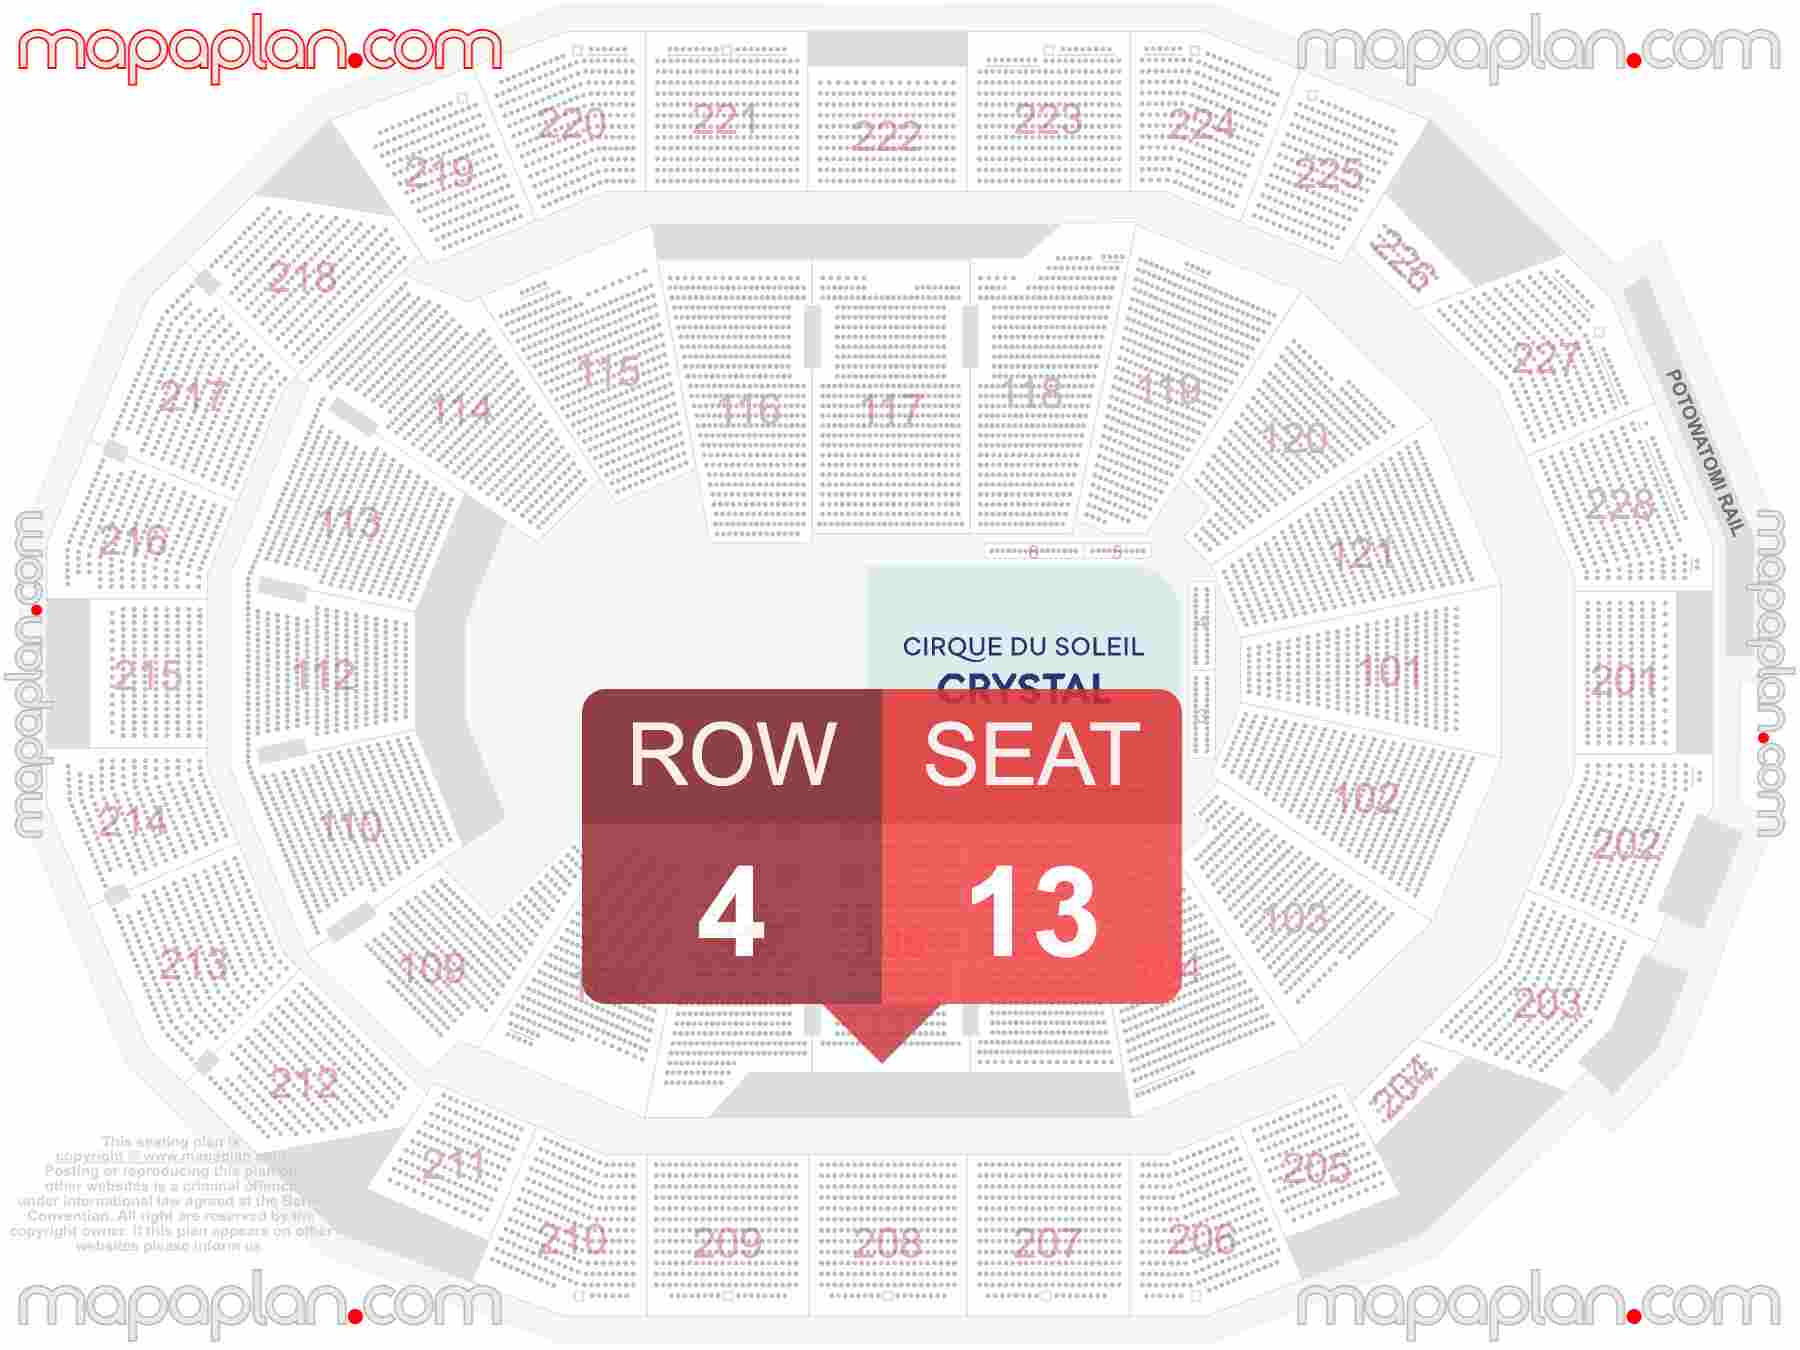 Milwaukee Fiserv Forum seating chart Cirque du Soleil 3d virtual view seat locator plan - Navigate seat numbers per row